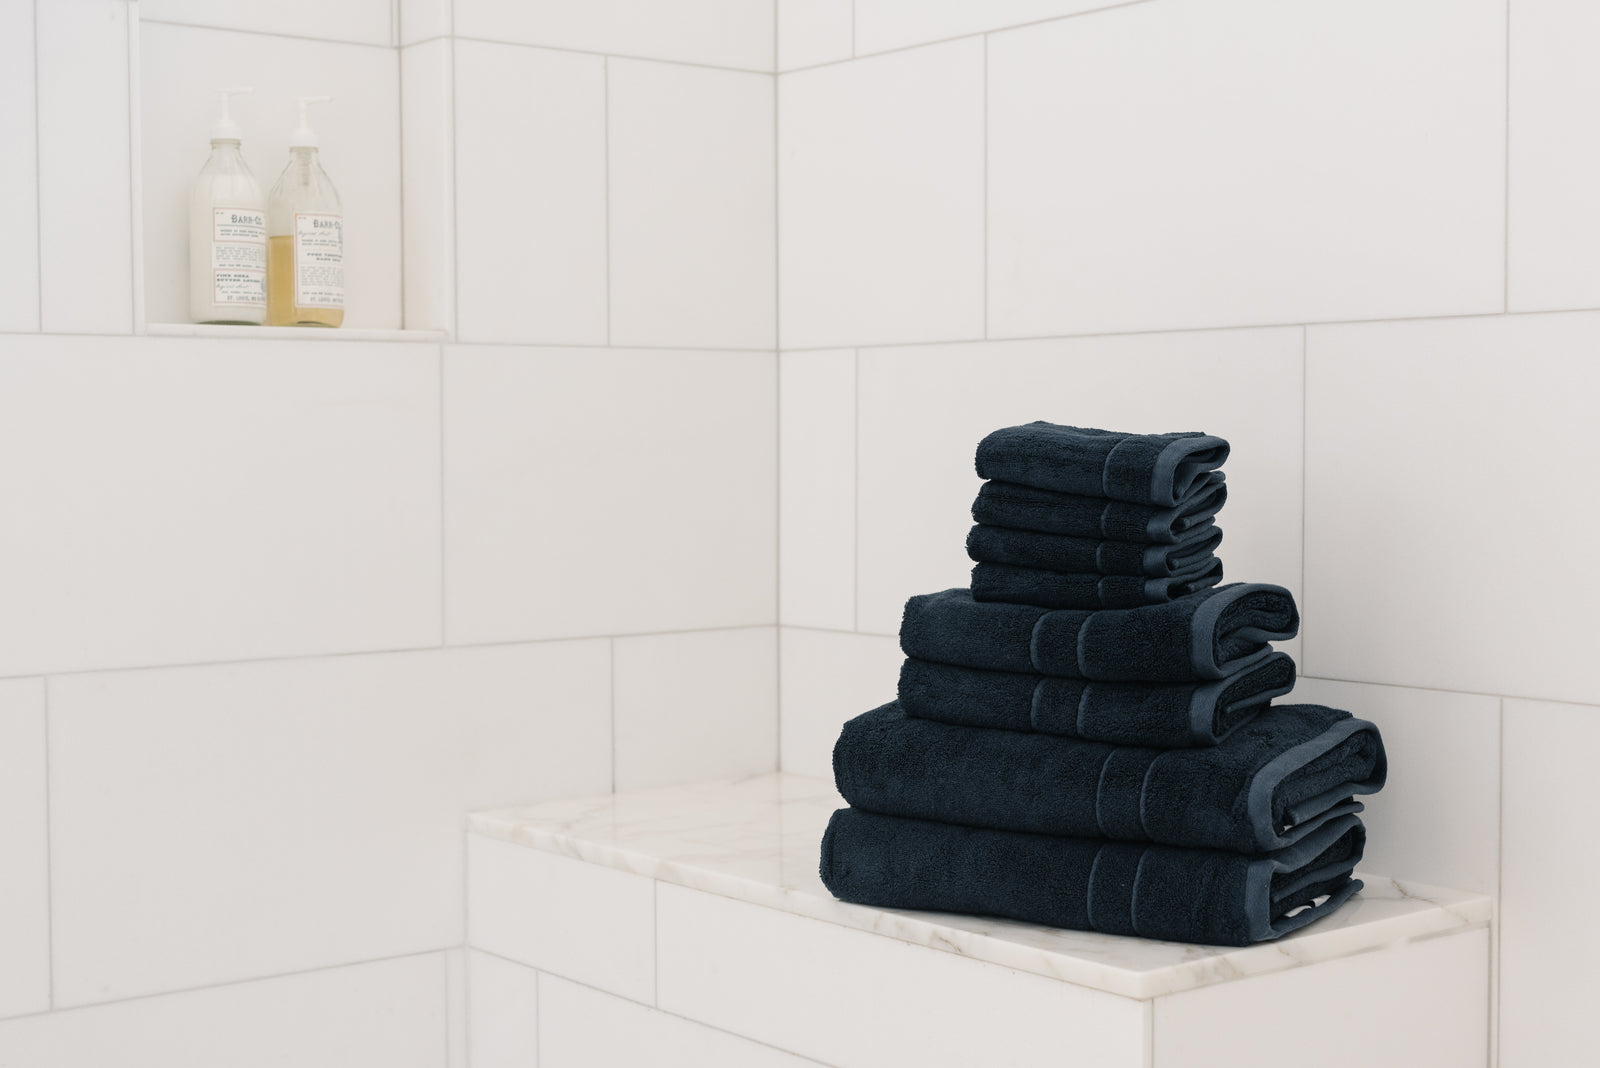 Premium Plush Bath Towel Set in the color Dusk. Photo of Dusk Premium Plush Bath Towel Set taken in a bathroom featuring white backsplash tile 